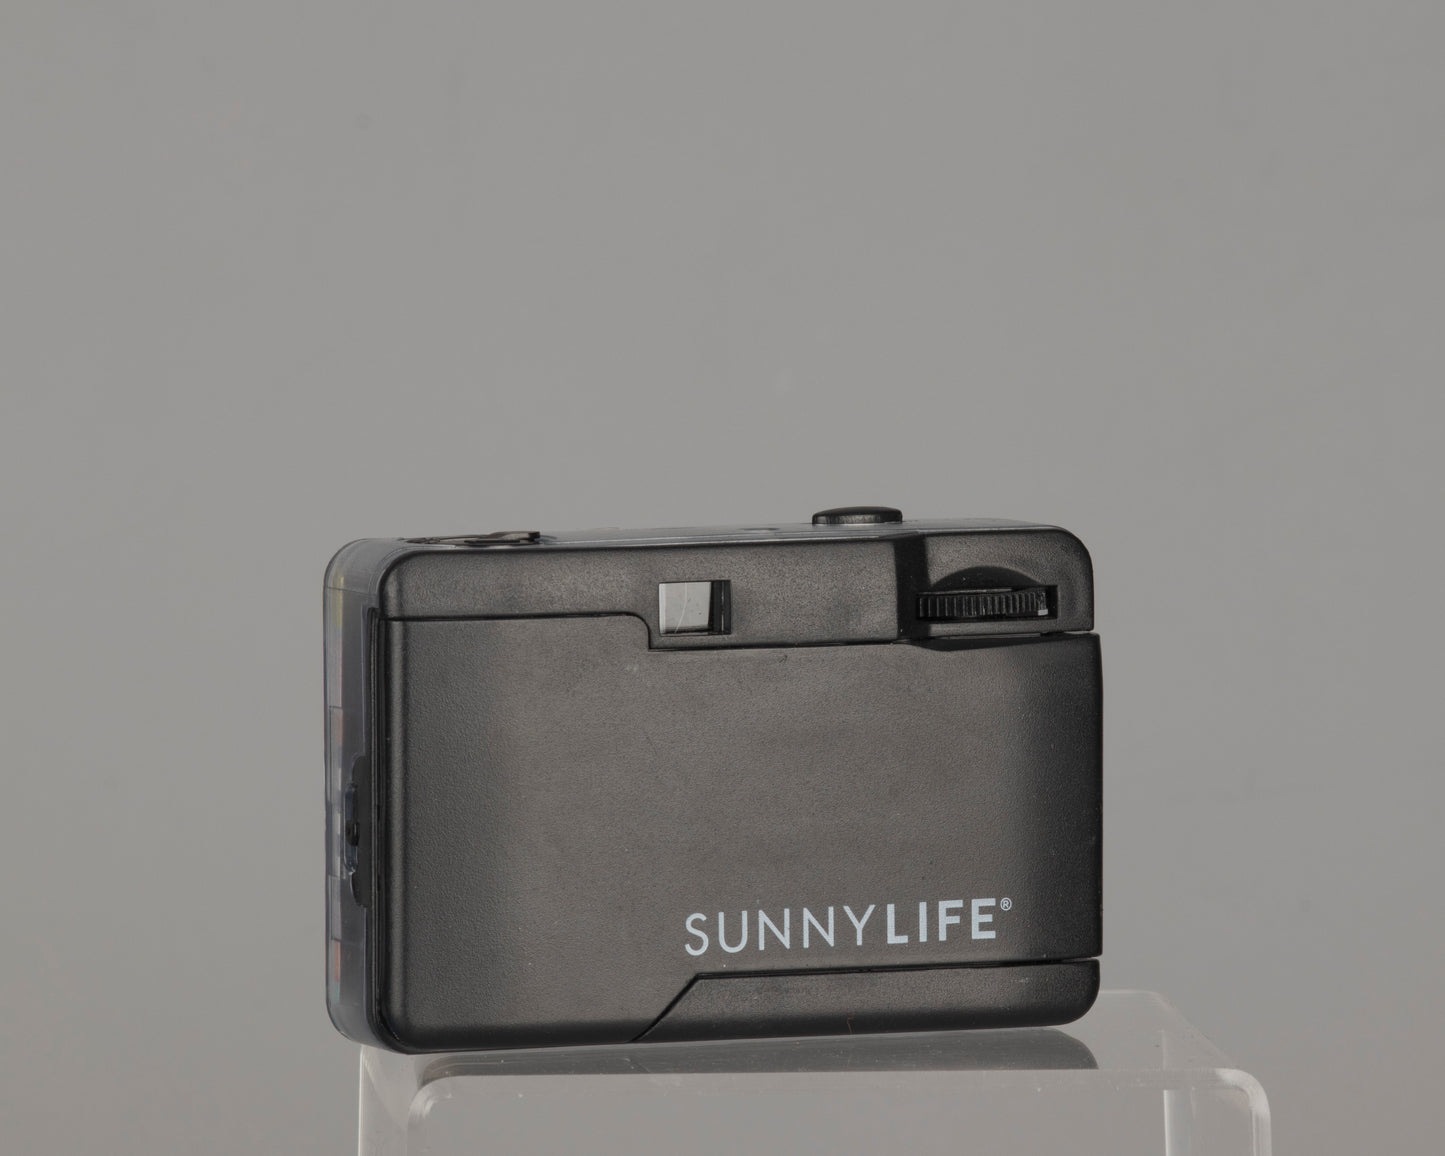 Sunnylife 35mm camera with underwater housing